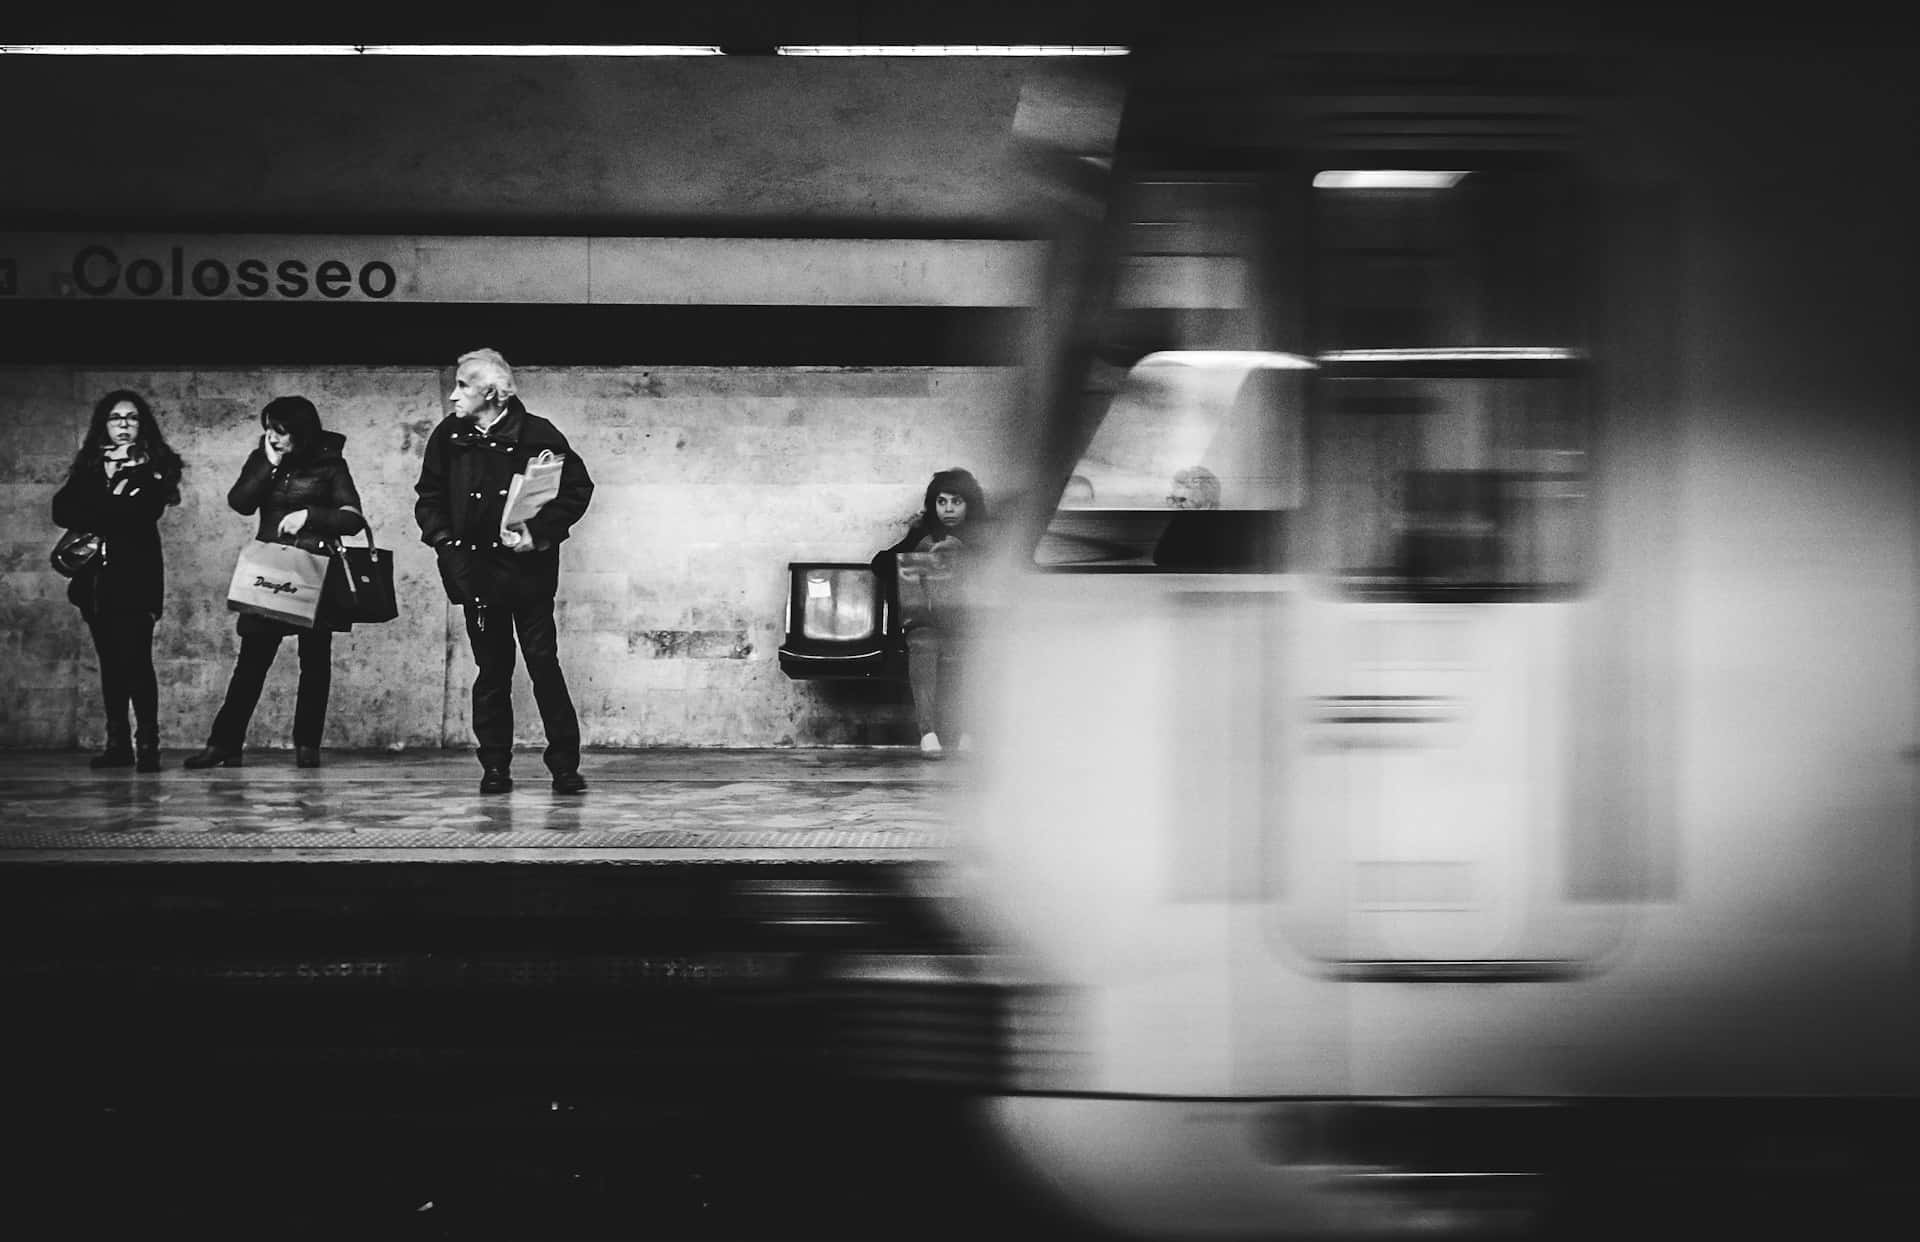 Subway Speed Blur Grunge Aesthetic.jpg Wallpaper